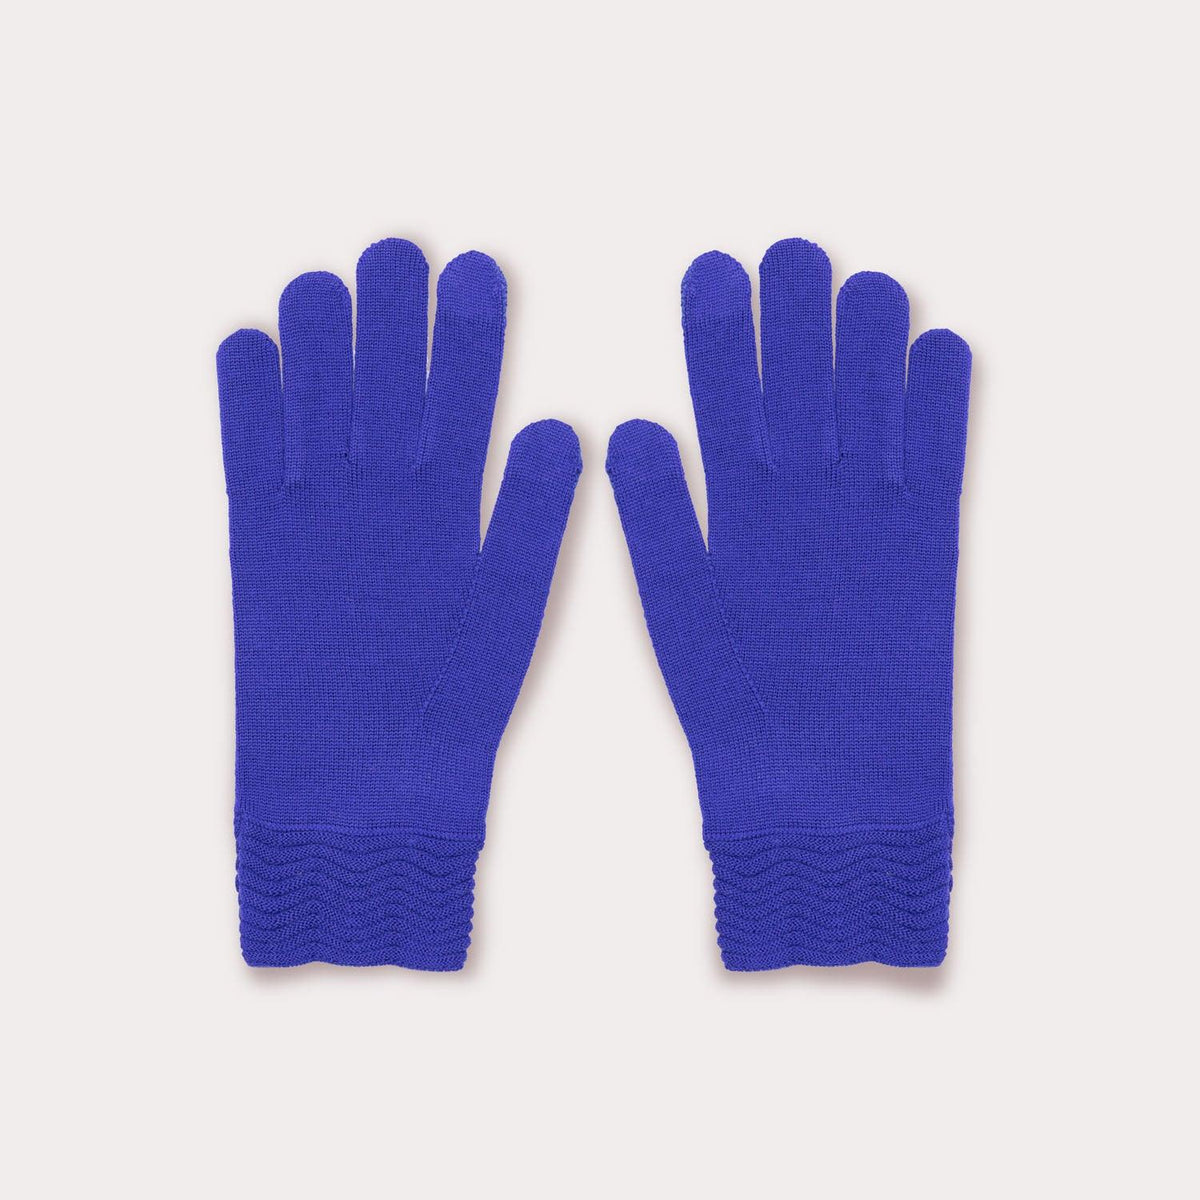 Indigo wool tech gallery gloves by Seymoure Gloves.